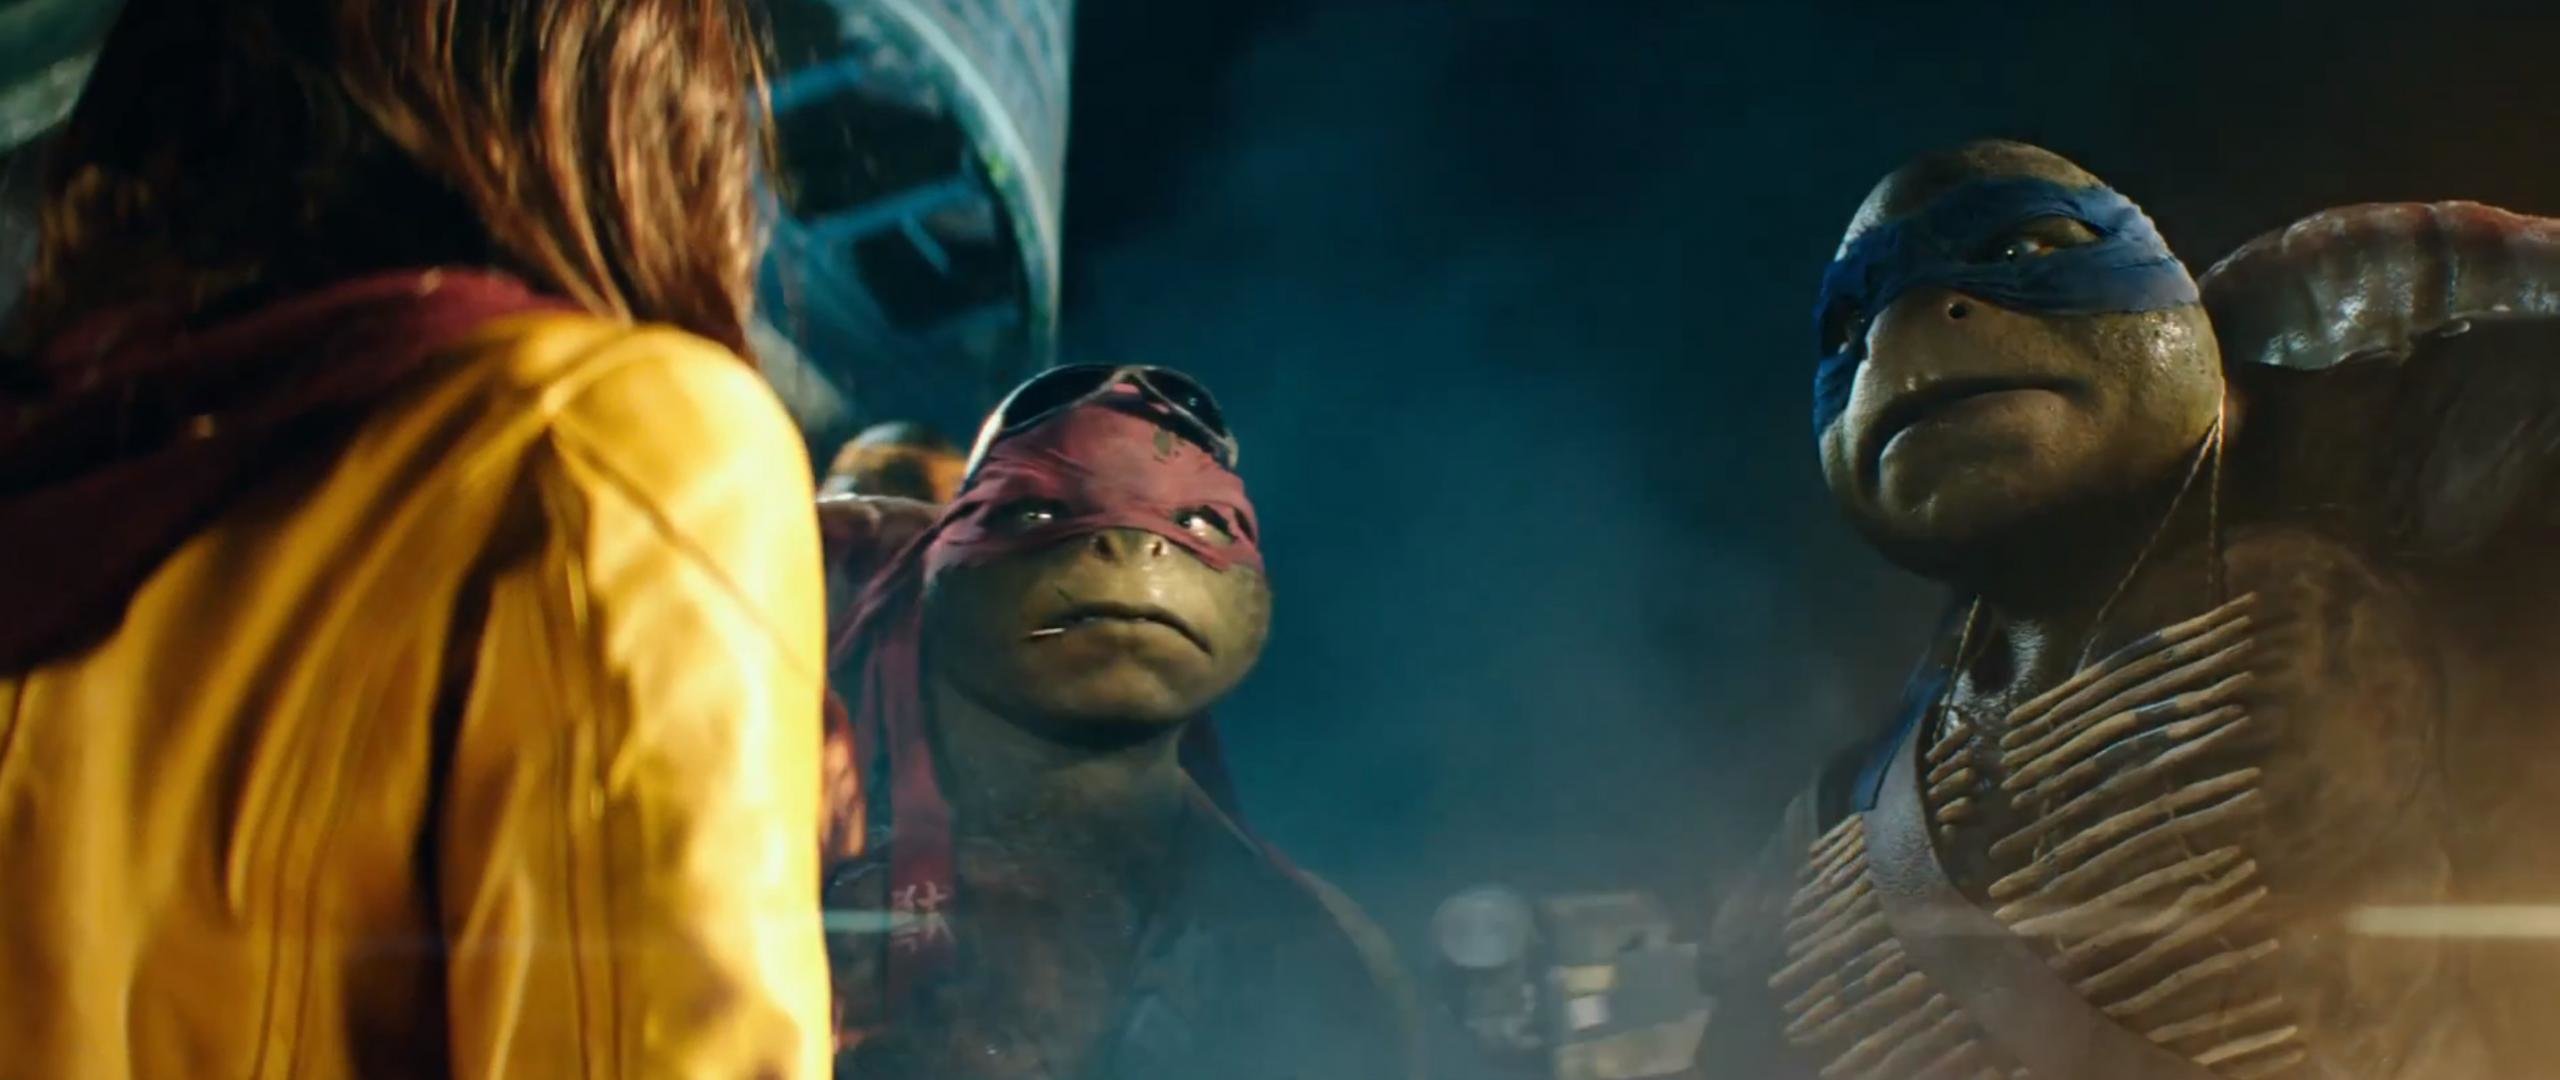 Best Teenage Mutant Ninja Turtles (2014) TMNT movie wallpaper ID:234189 for High Resolution hd 2560x1080 PC